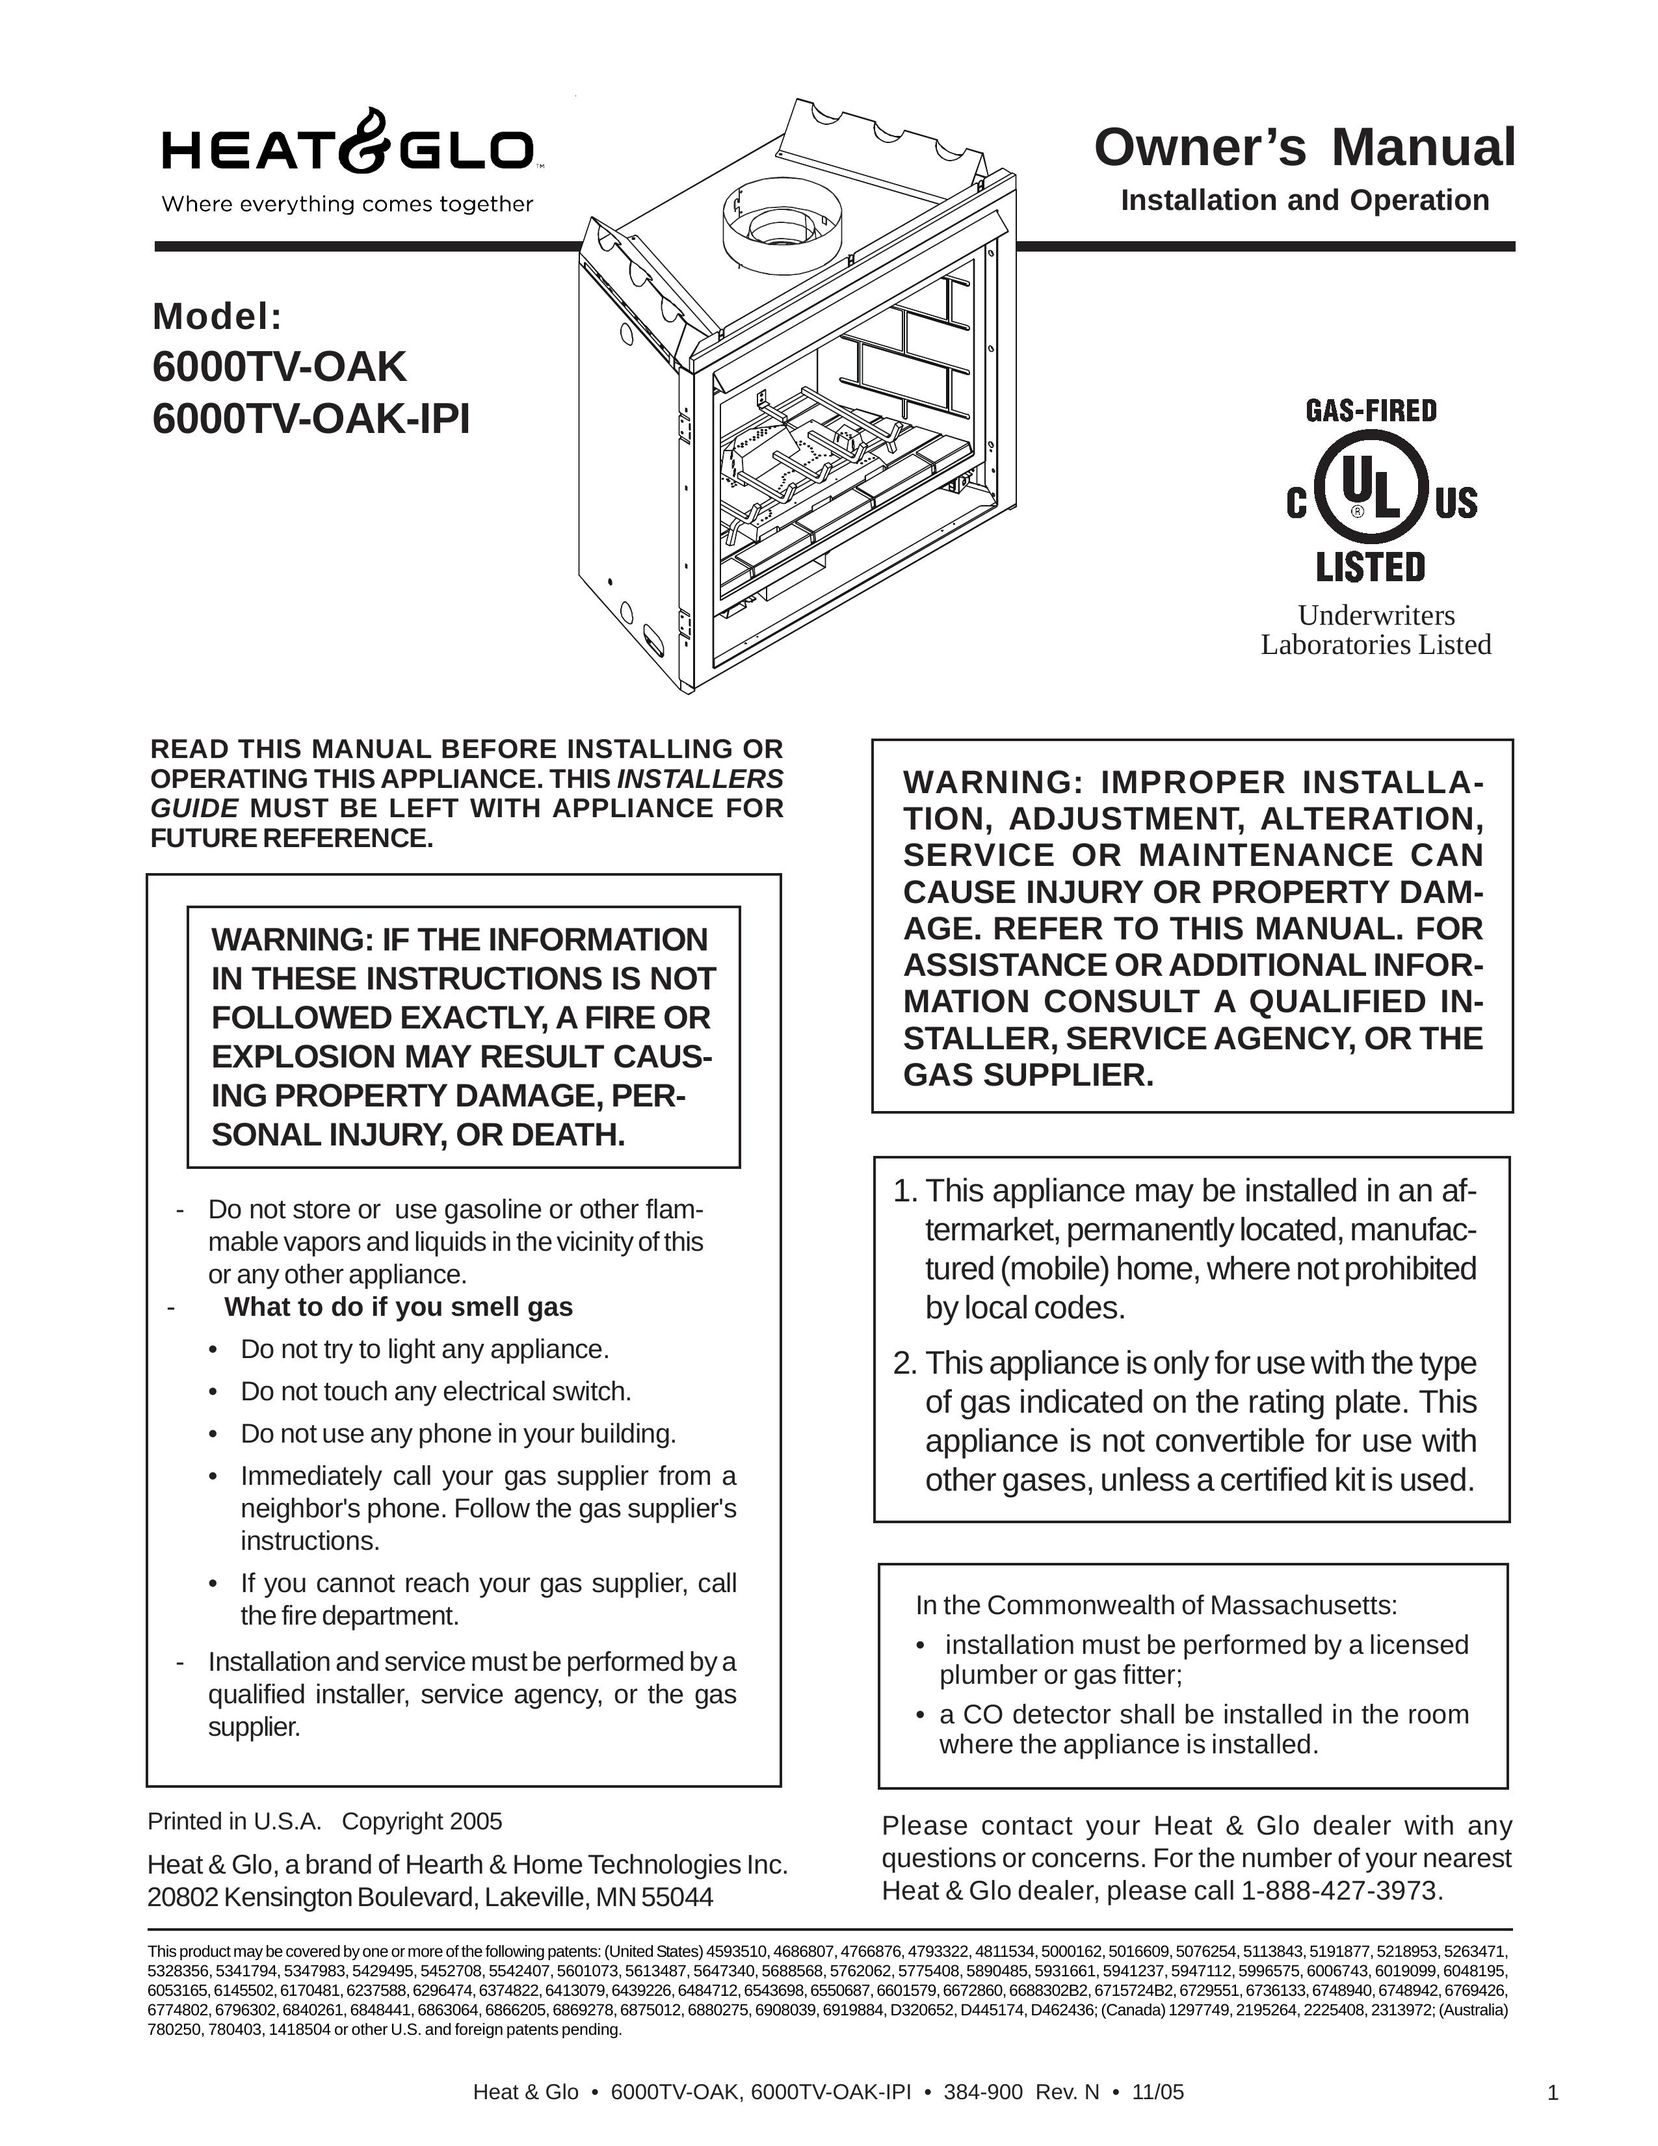 Heat & Glo LifeStyle 6000TV-OAK-IPI Indoor Fireplace User Manual